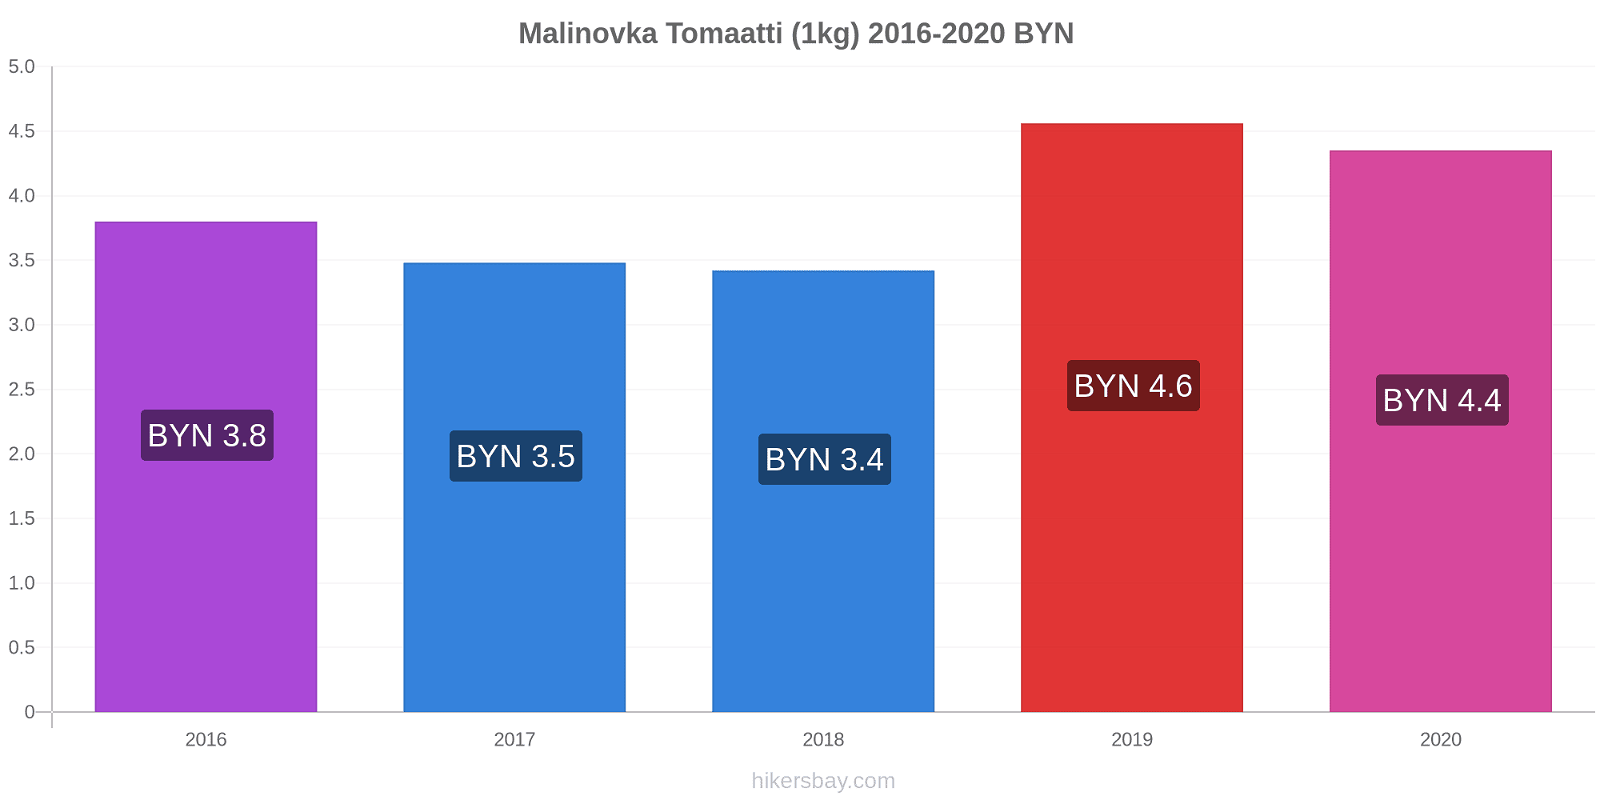 Malinovka hintojen muutokset Tomaatti (1kg) hikersbay.com